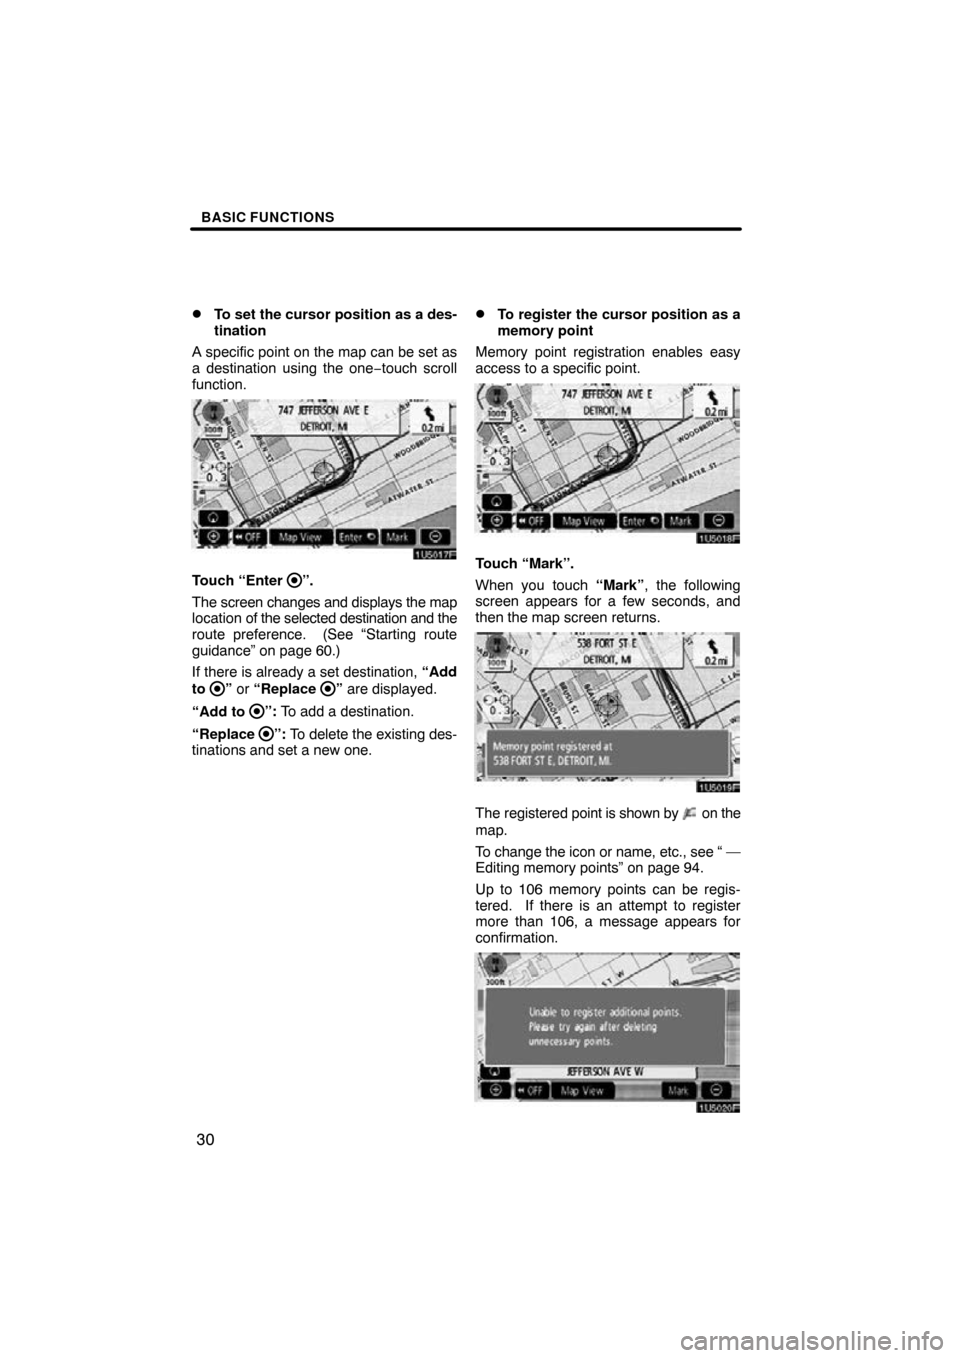 TOYOTA HIGHLANDER 2009 XU40 / 2.G Navigation Manual BASIC FUNCTIONS
30

To set the cursor position as a des-
tination
A specific point on the map can be set as
a destination using the one −touch scroll
function.
Touch “Enter ”.
The screen change